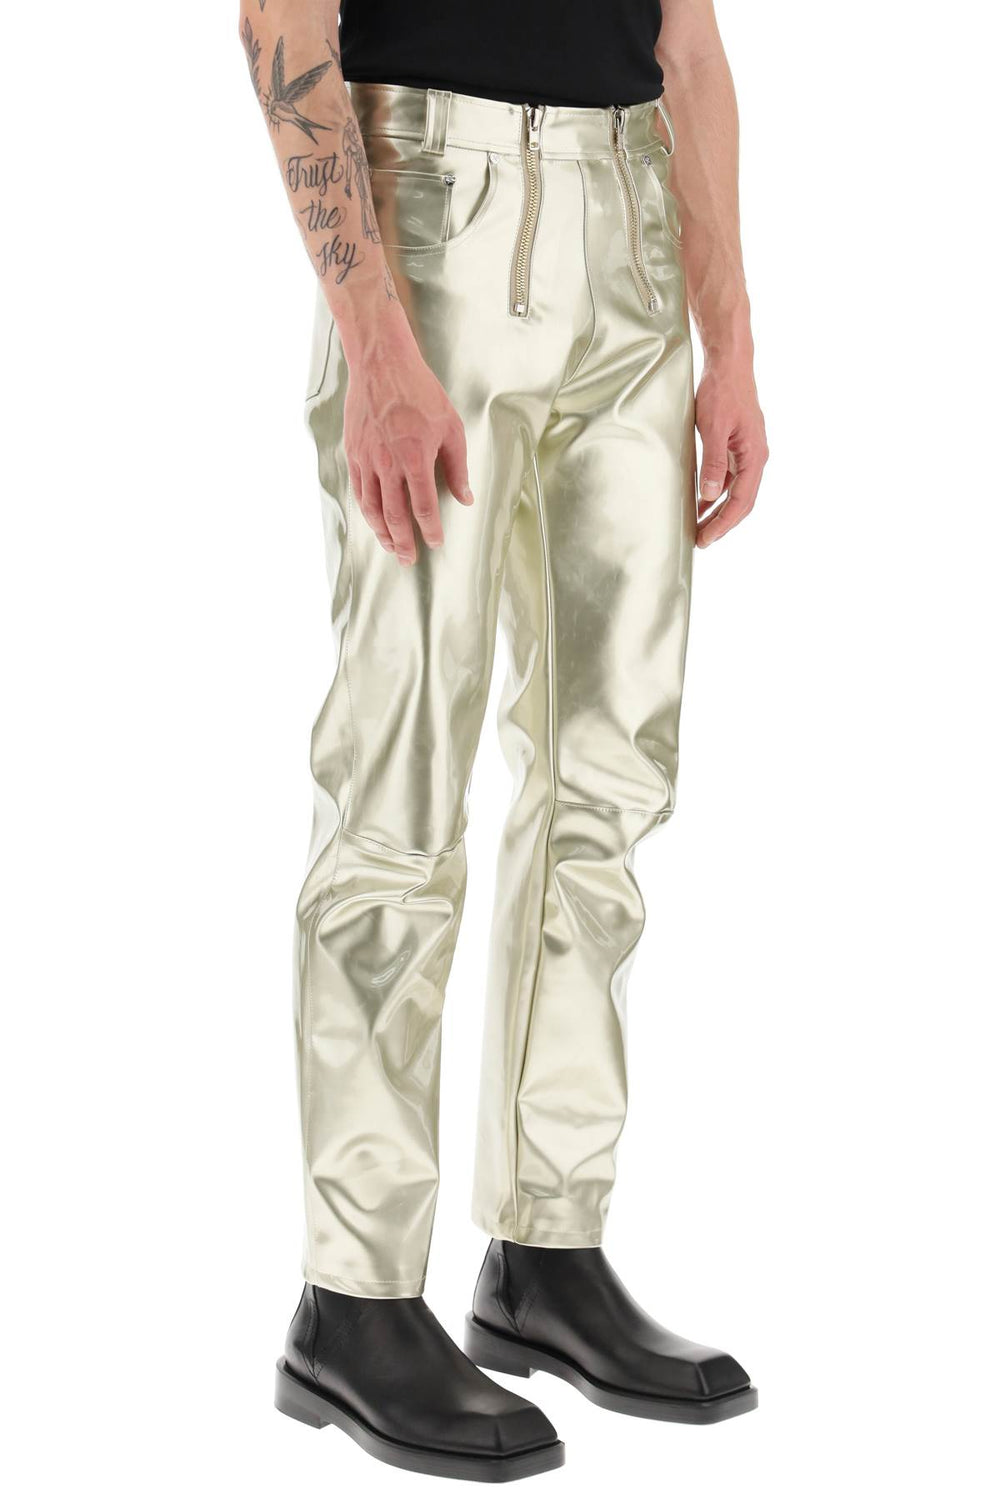 Gmbh double zip vinyl pants-1